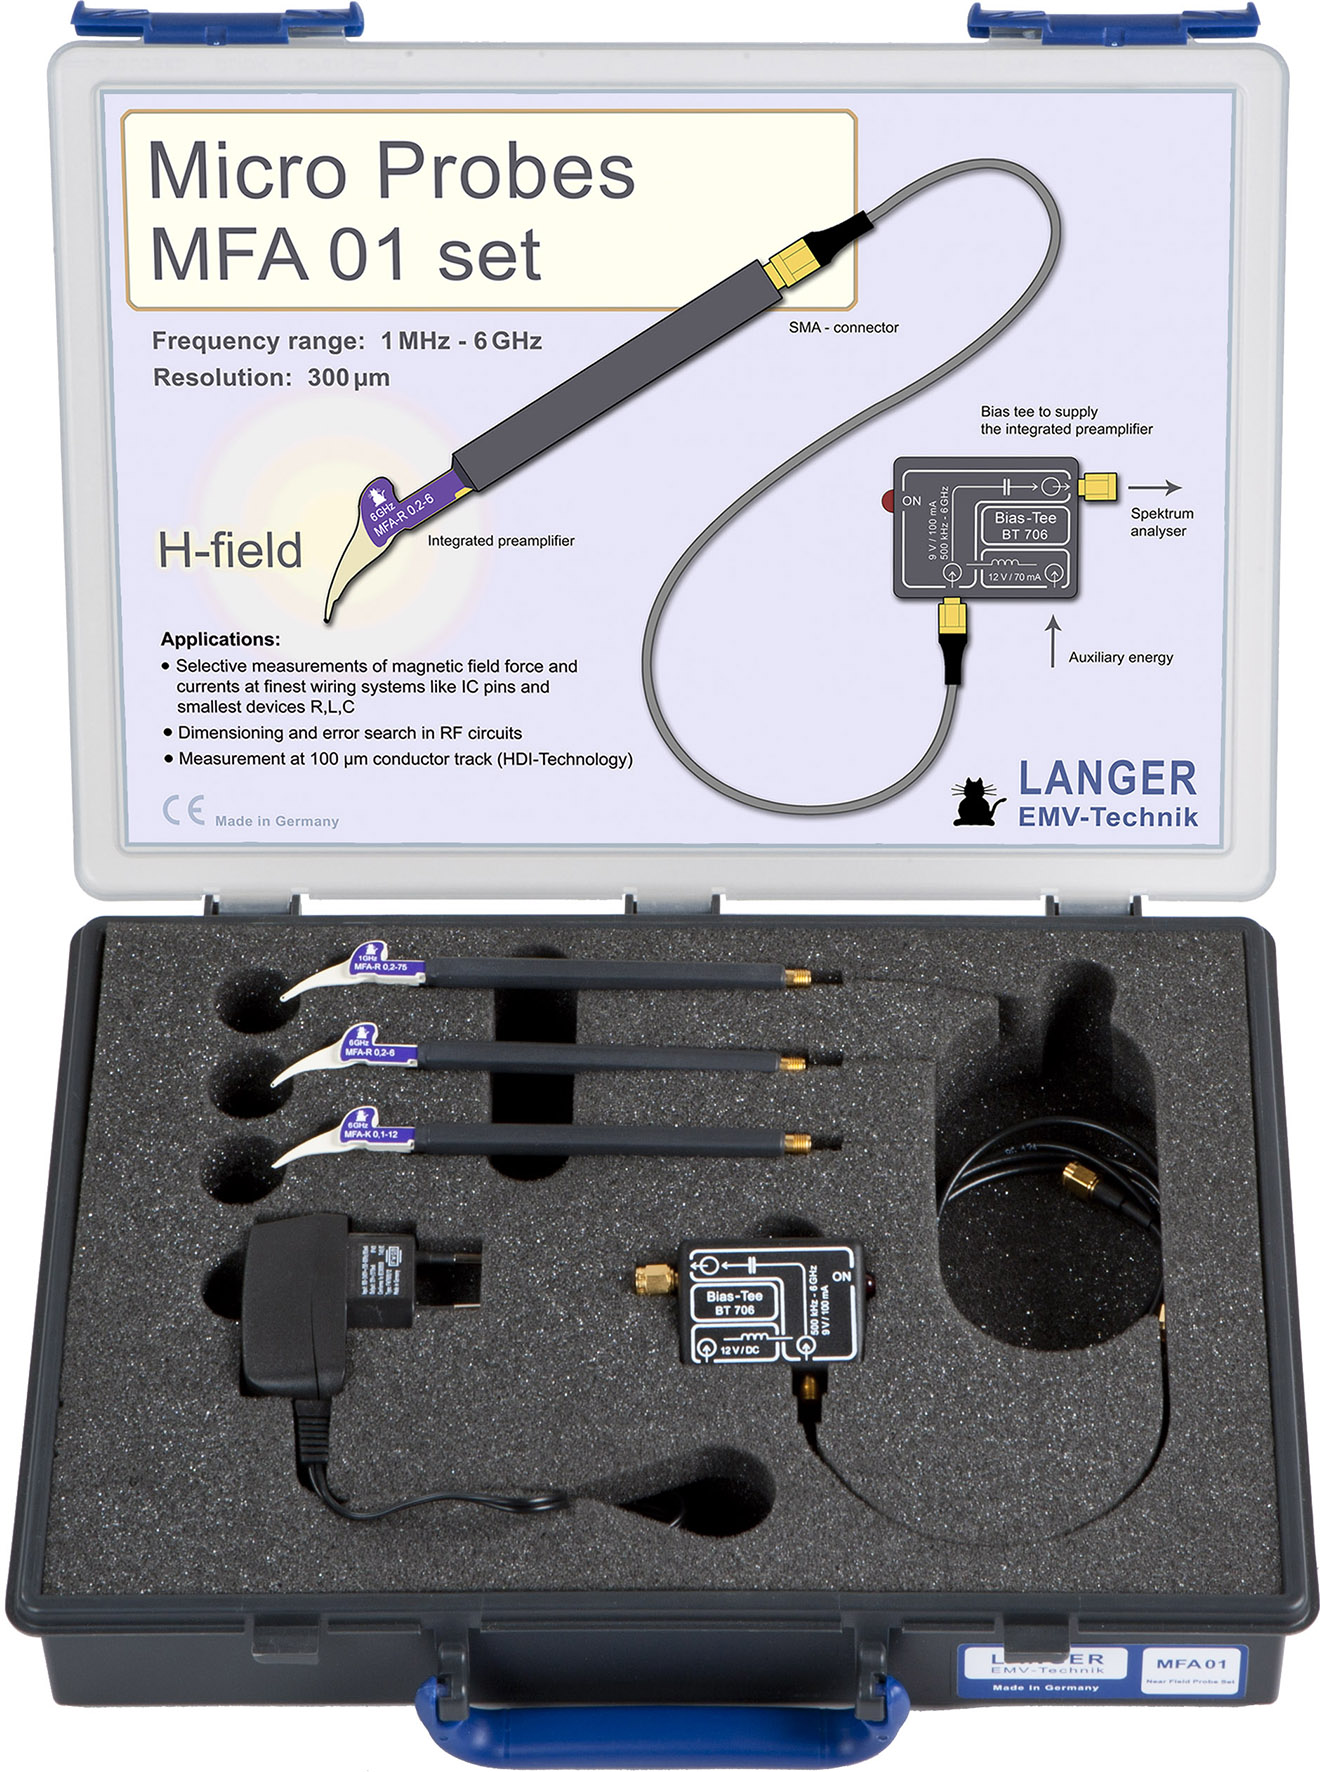 MFA 01 set, Micro Probes 1 MHz up to 6 GHz